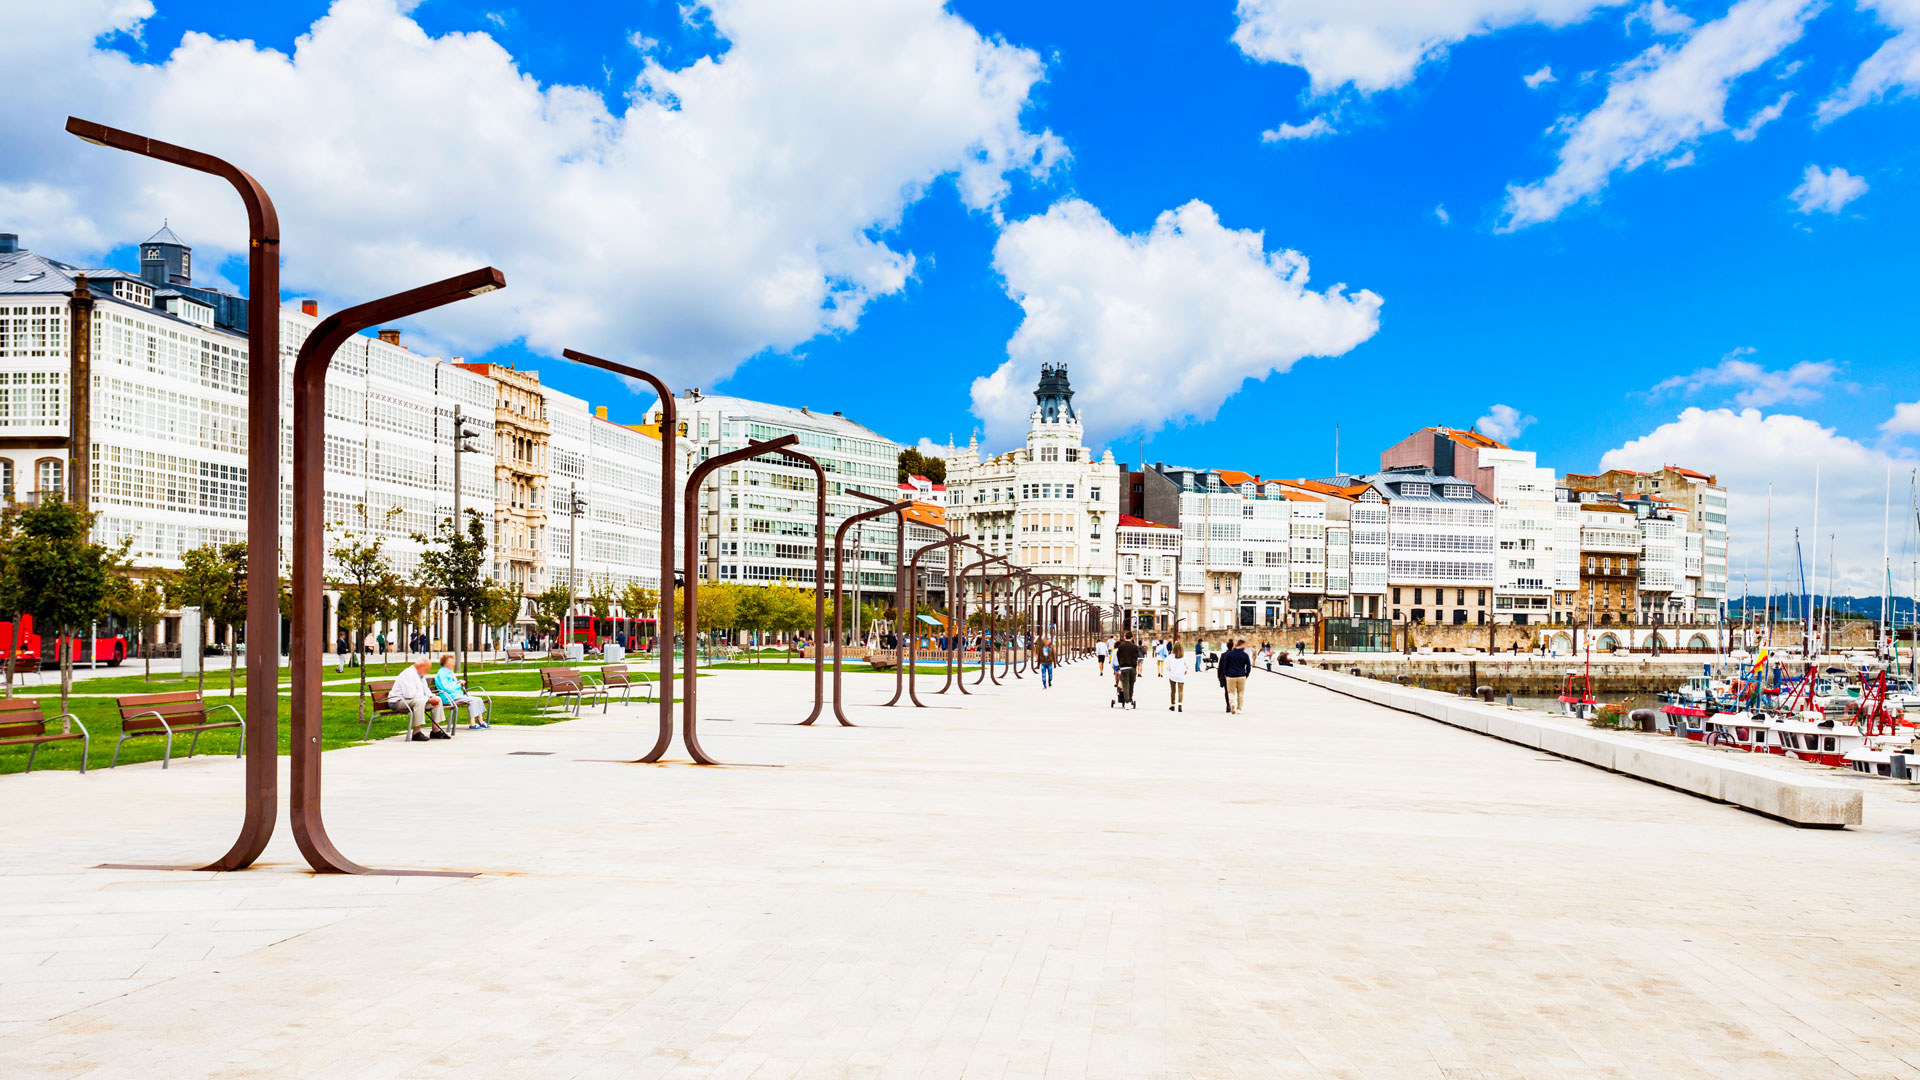 Walk around A Coruña